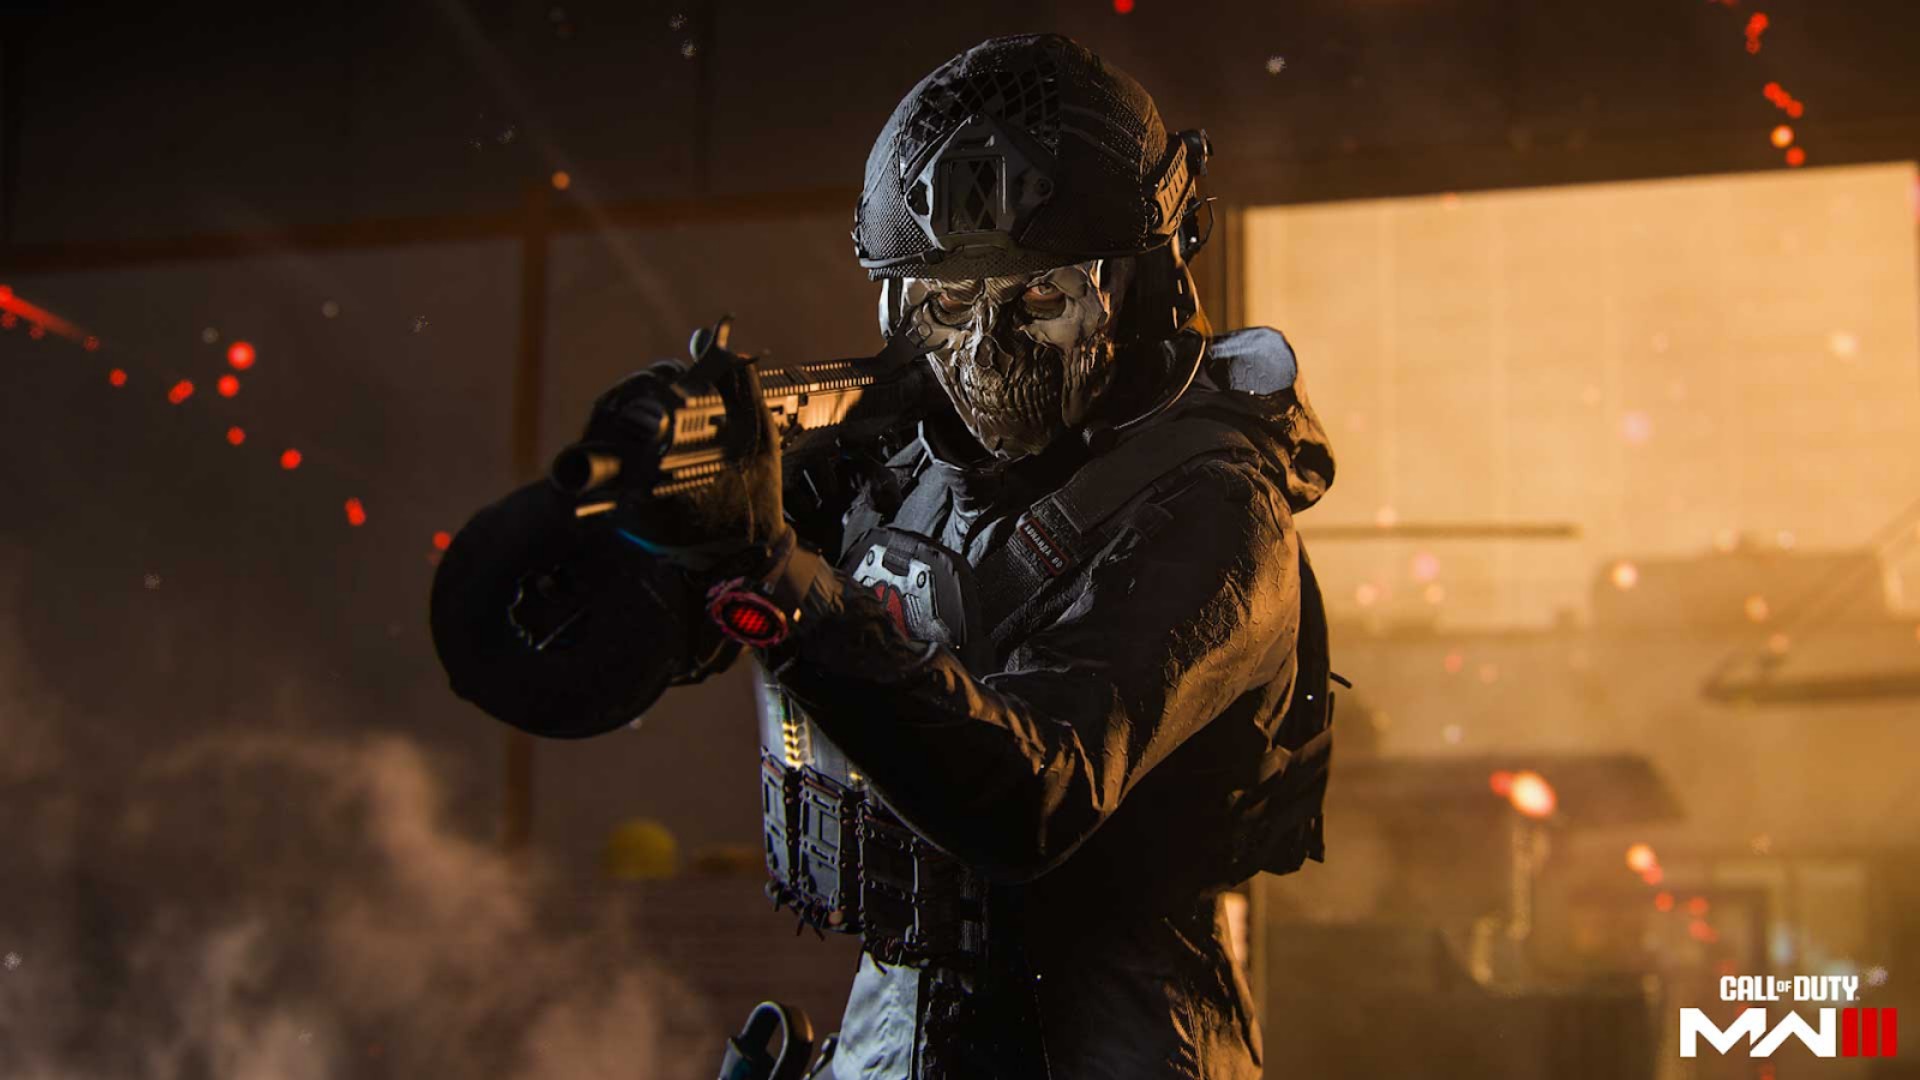 Call of Duty: Modern Warfare PC specs revealed